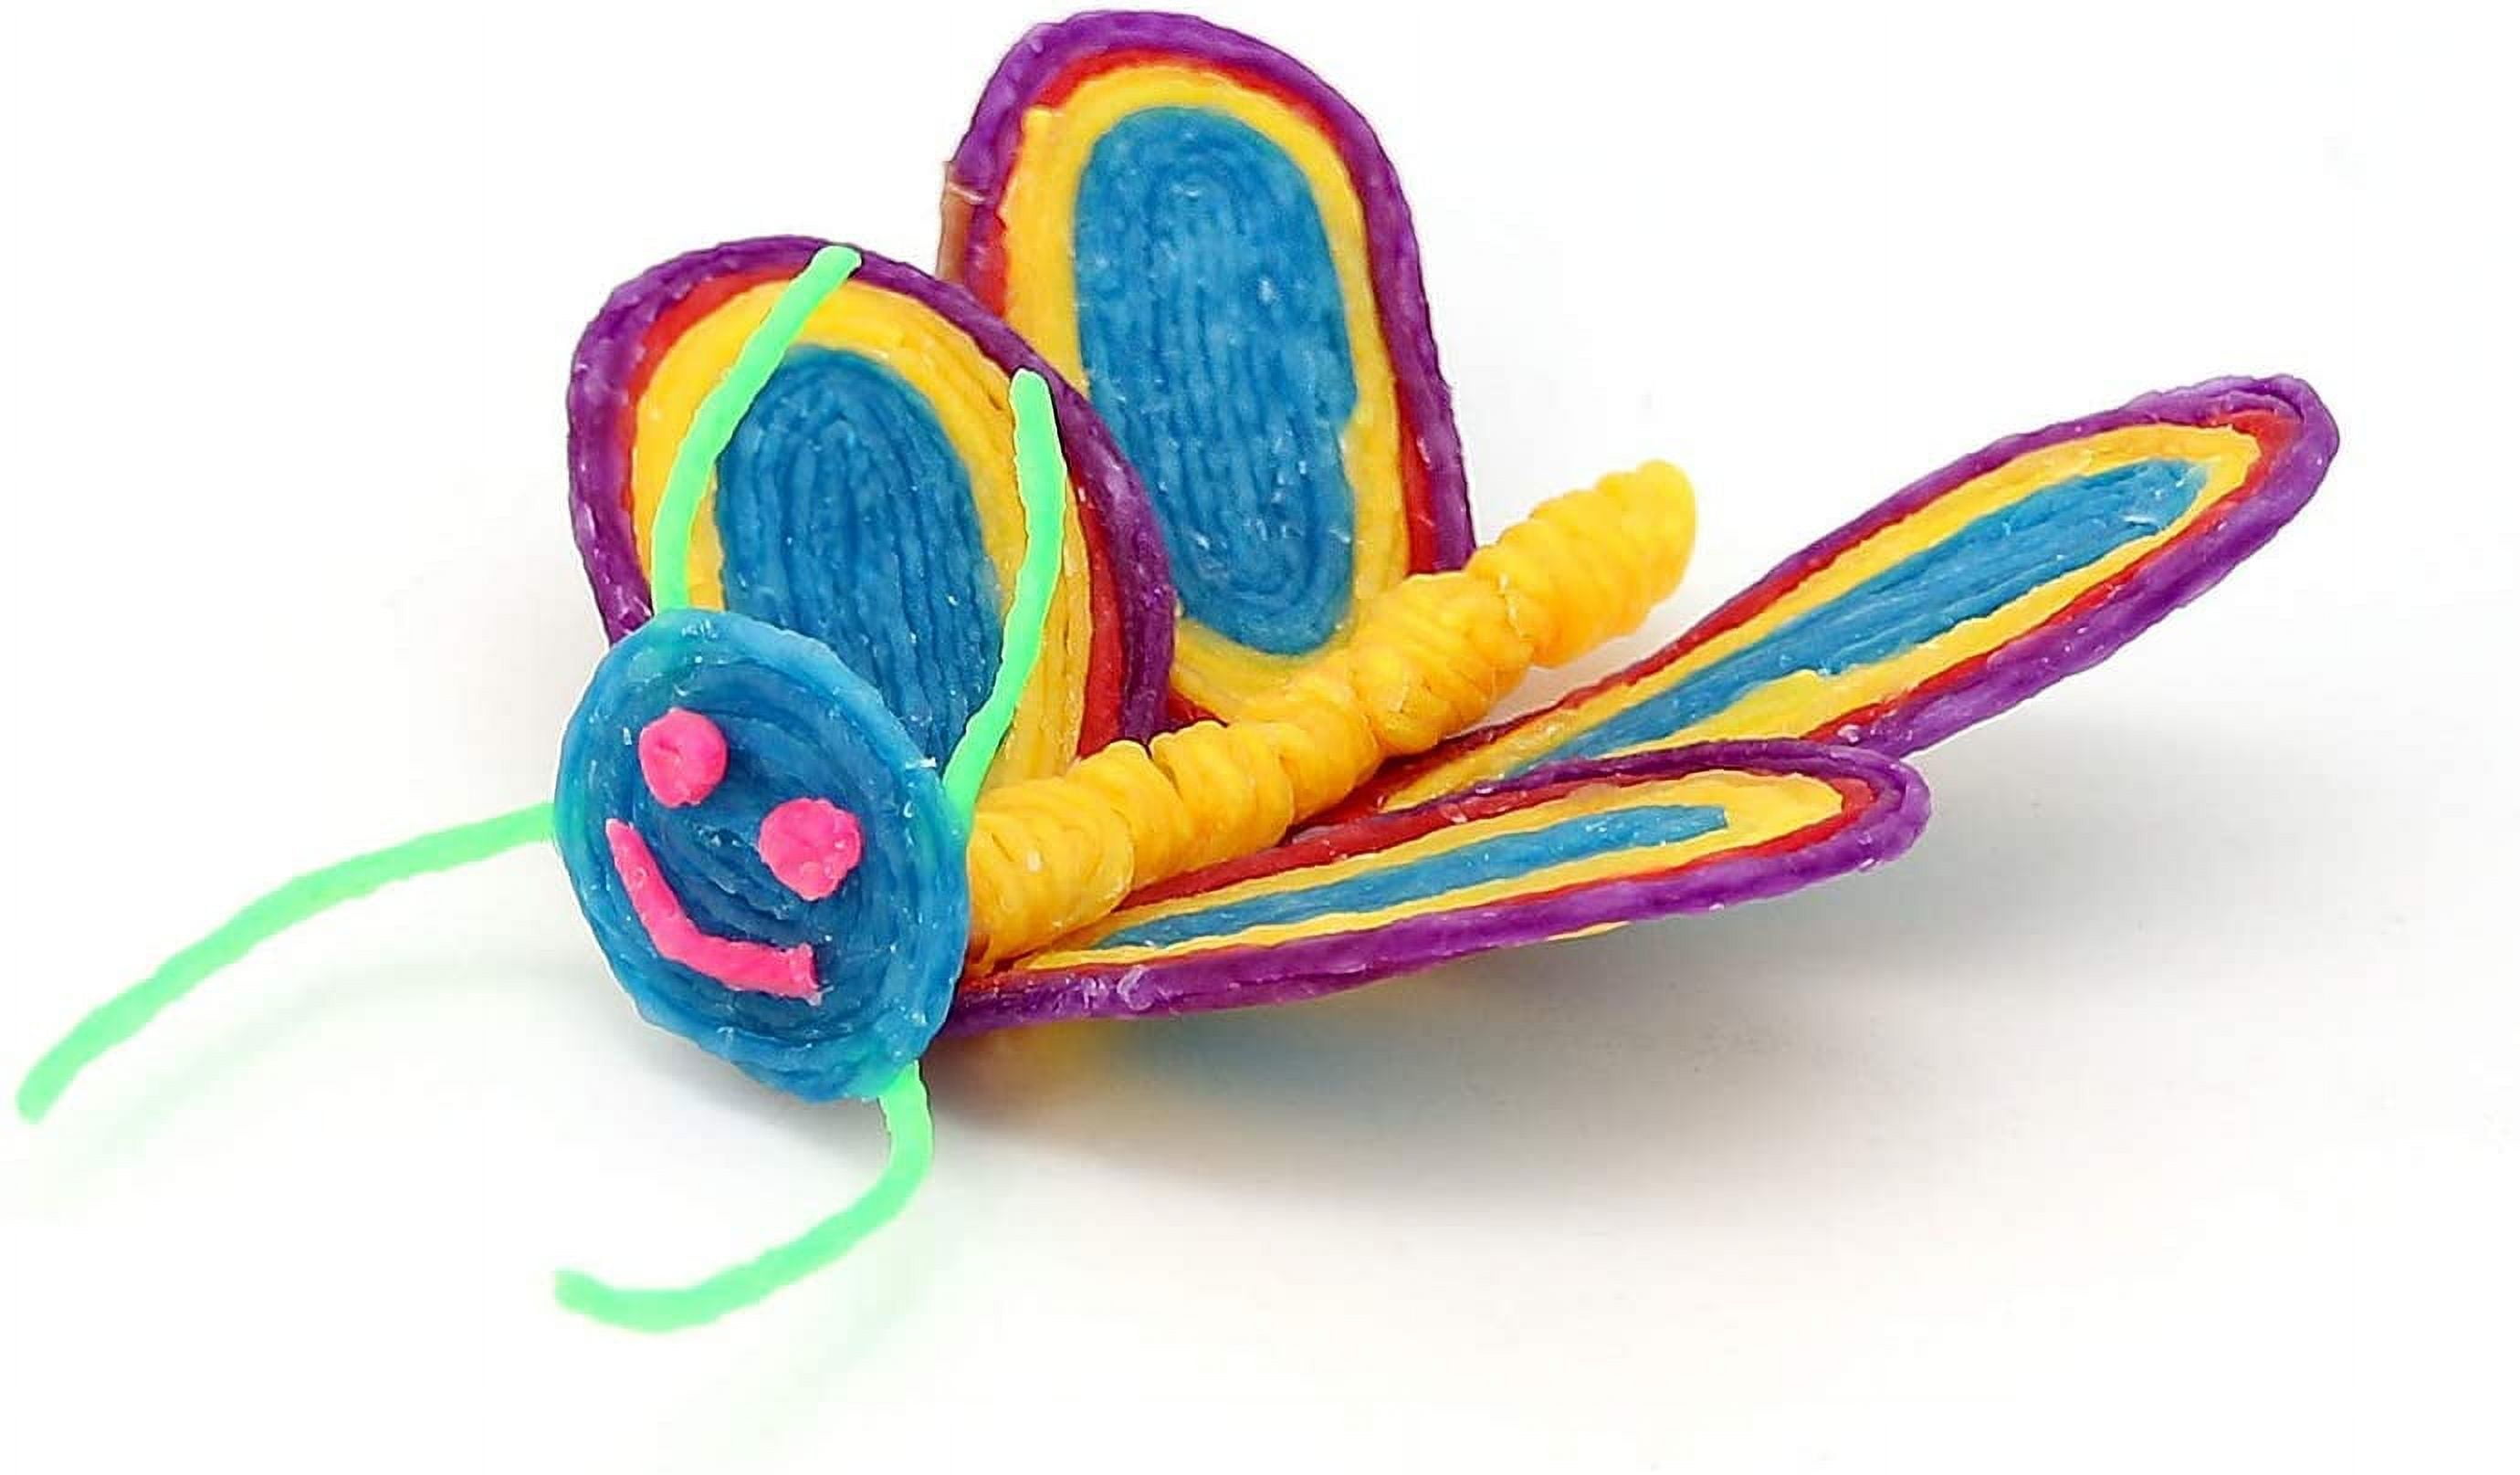  Vyndicca 1500Pcs Wax Craft Sticks,Bendable Wax Yarn Sticks in  13 Colors,Sticky Wax Sticks for Kids,Reusable Molding Sculpting Sticks with  Storage Box for Handicraft DIY School Project Art Supplies : Arts, Crafts